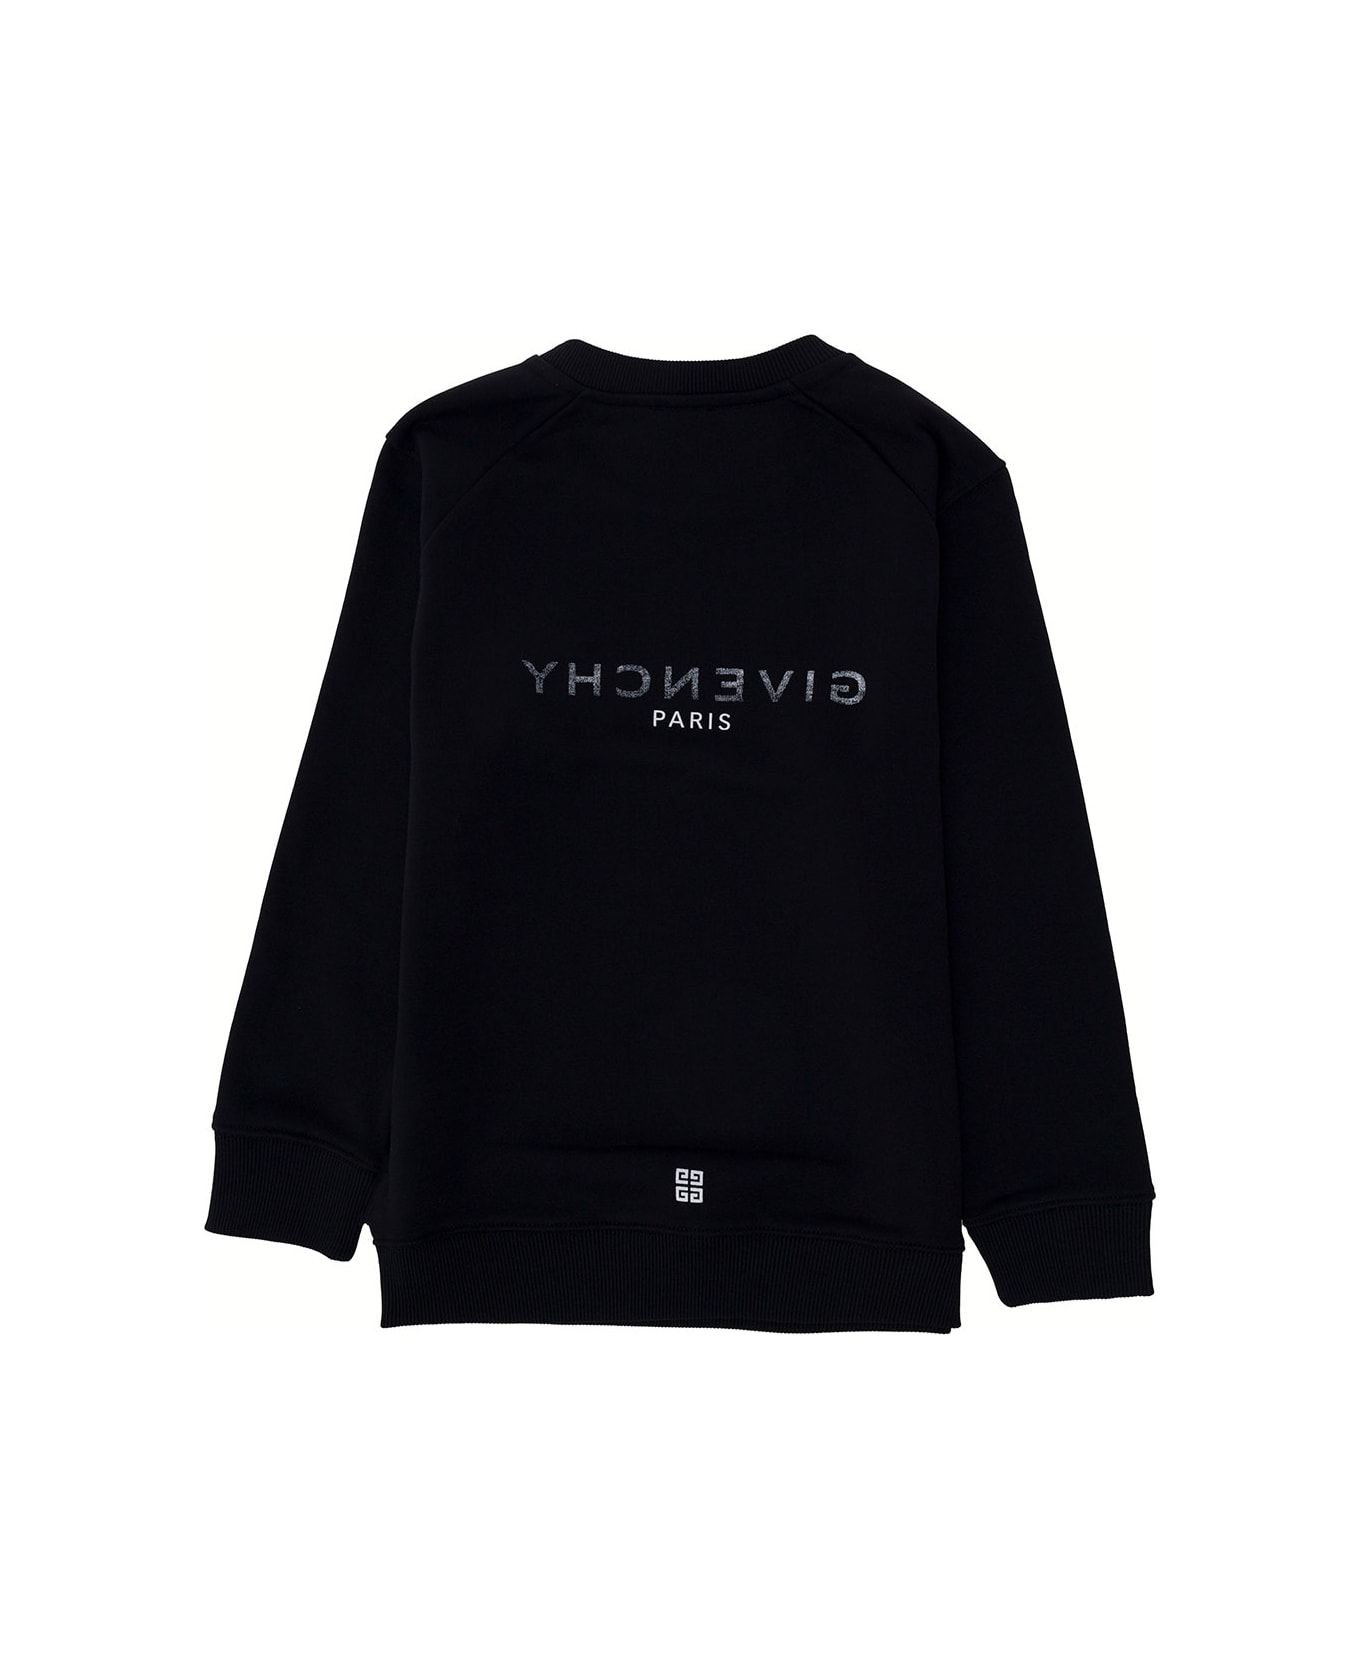 Givenchy Boy Blend Cotton Black Sweatshirt With Logo Print - Black